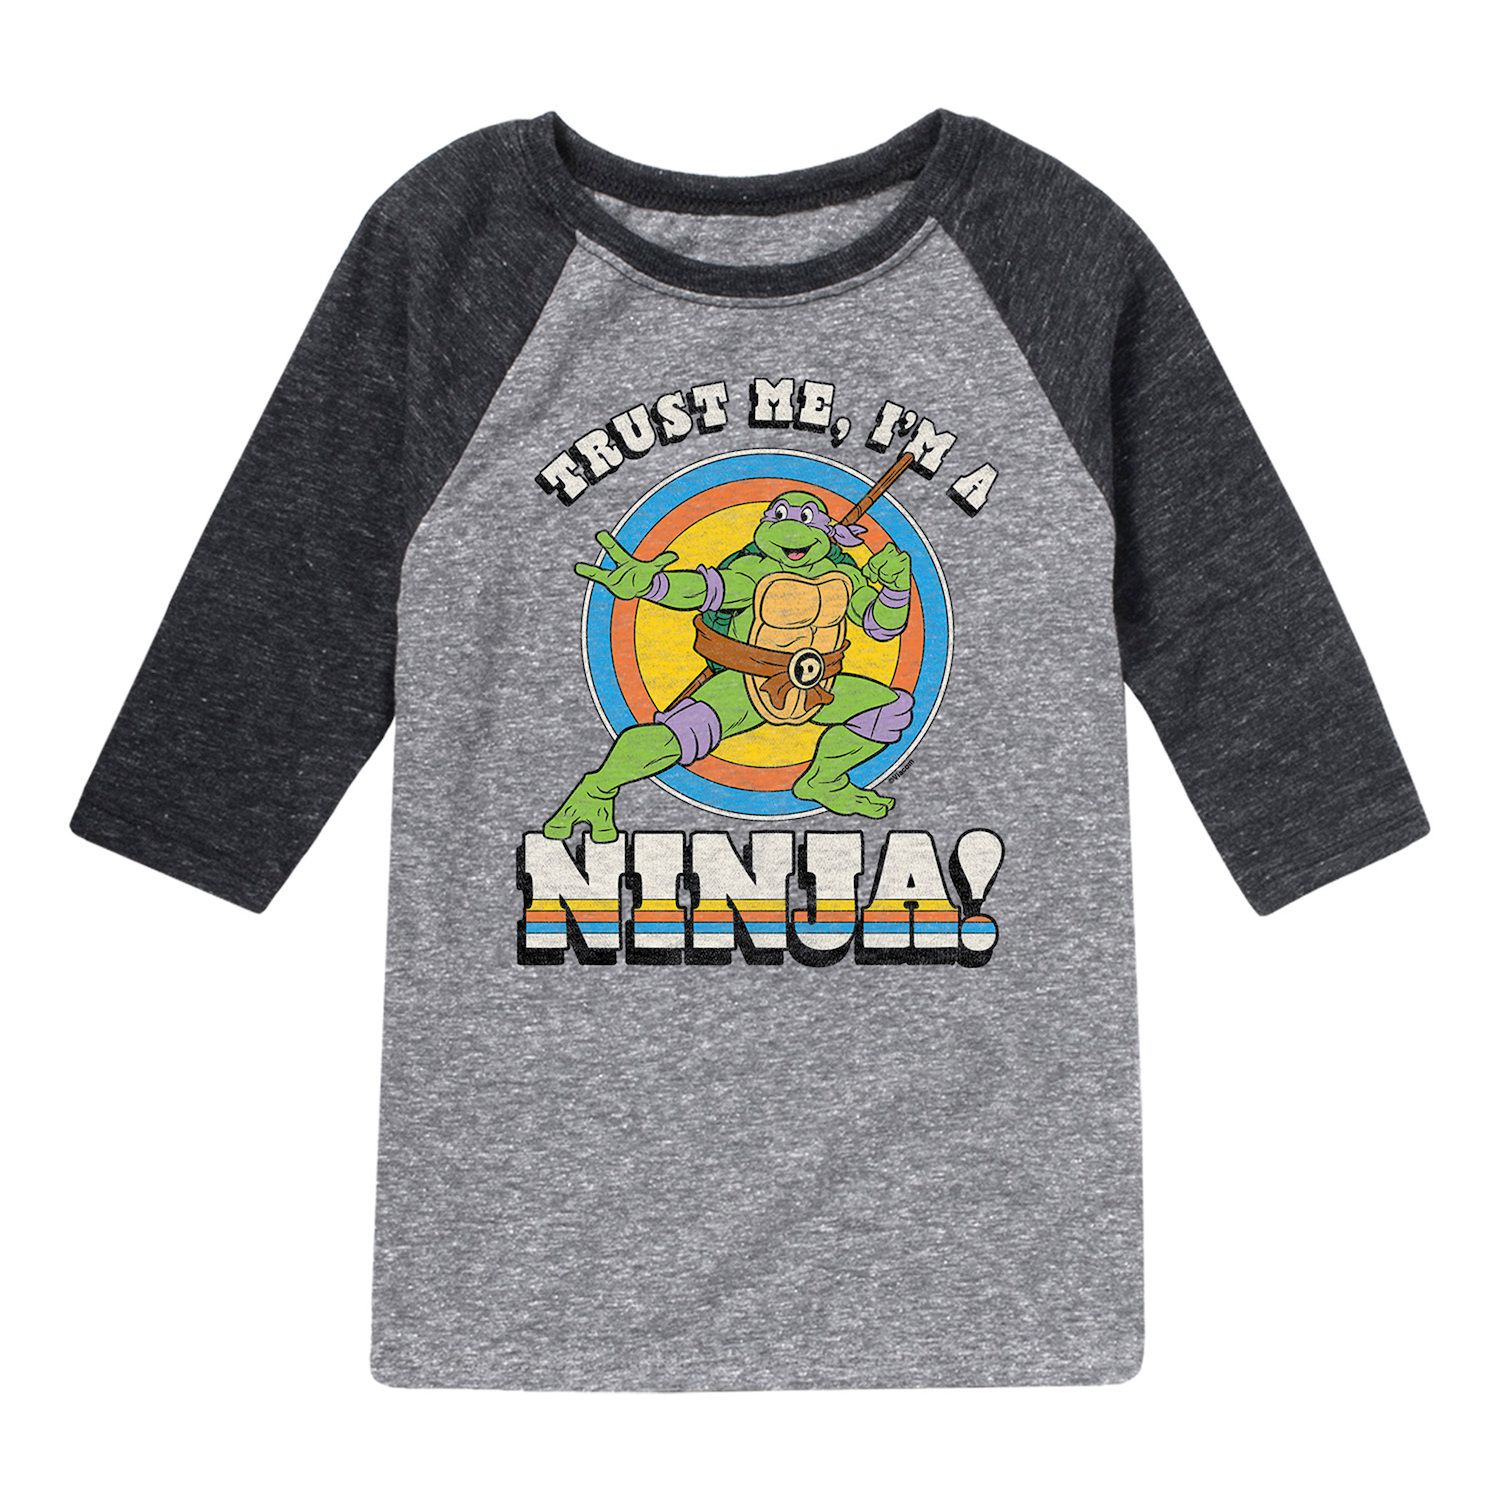 Teenage Mutant Ninja Turtles x Naruto Group Shot T-Shirt